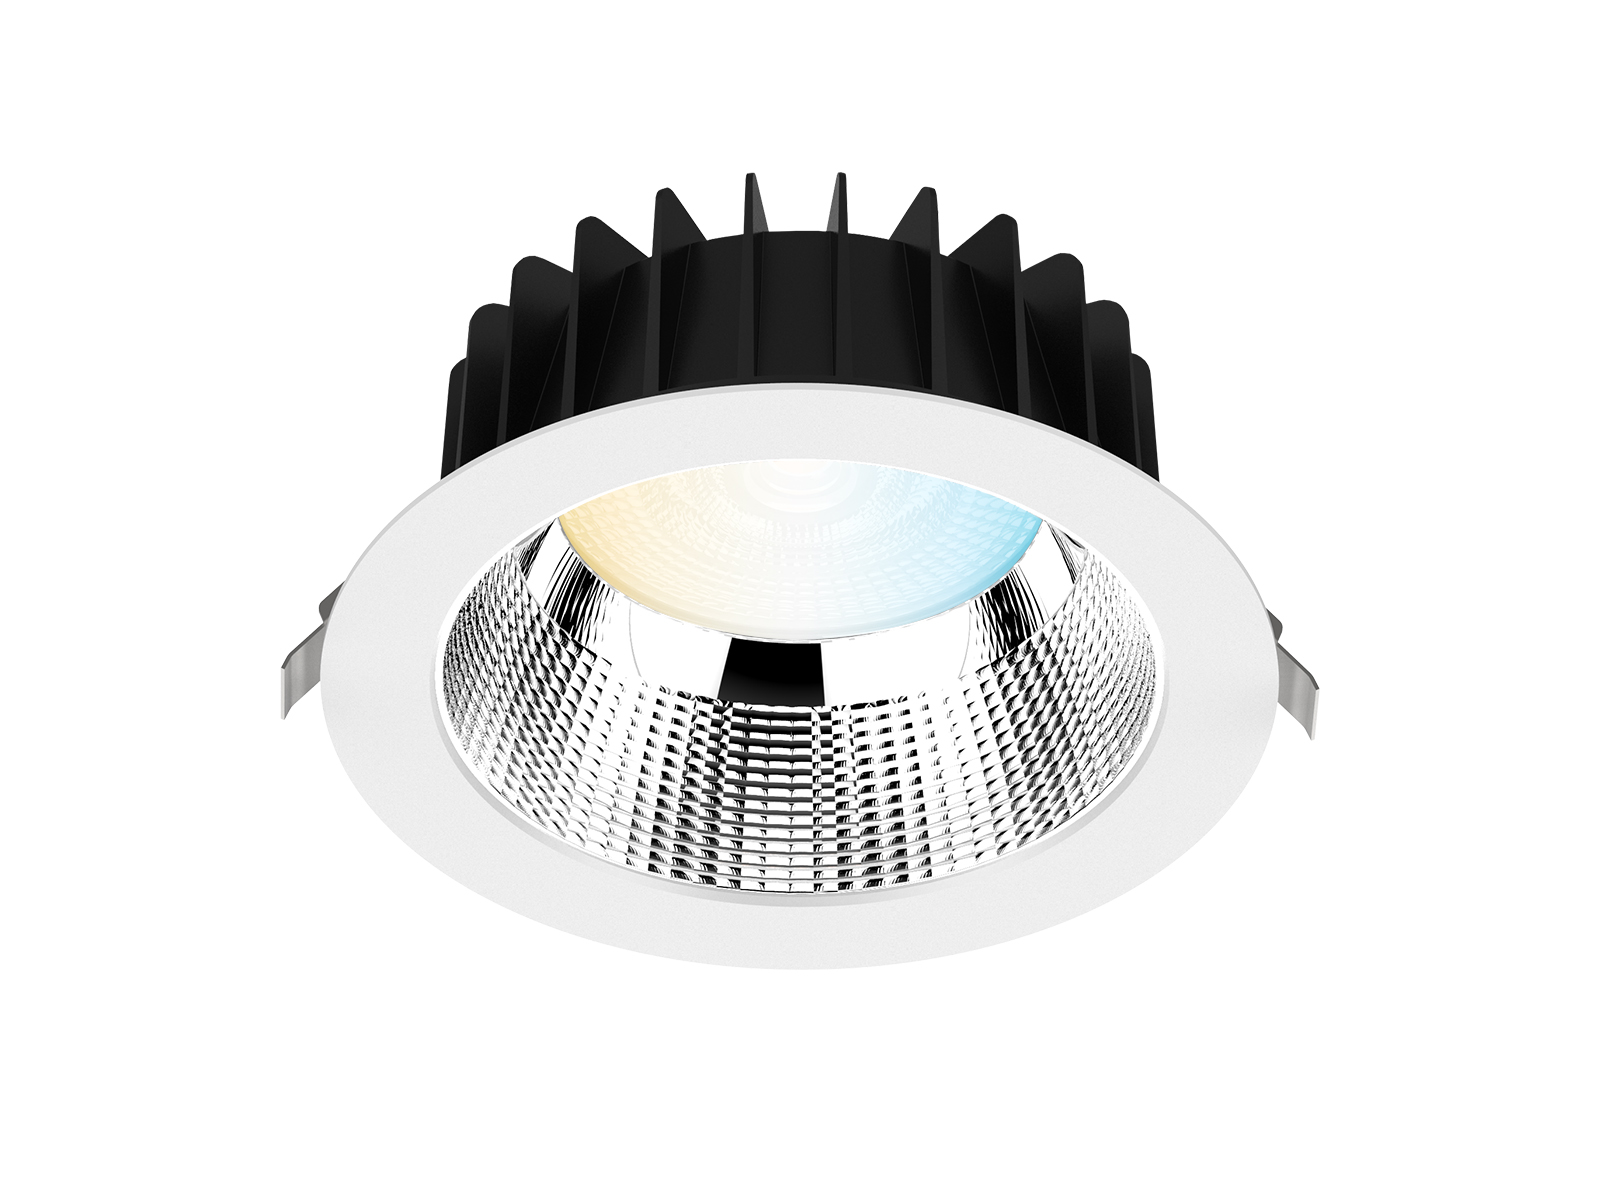 DL178-B1-I03 Series LED Downlight